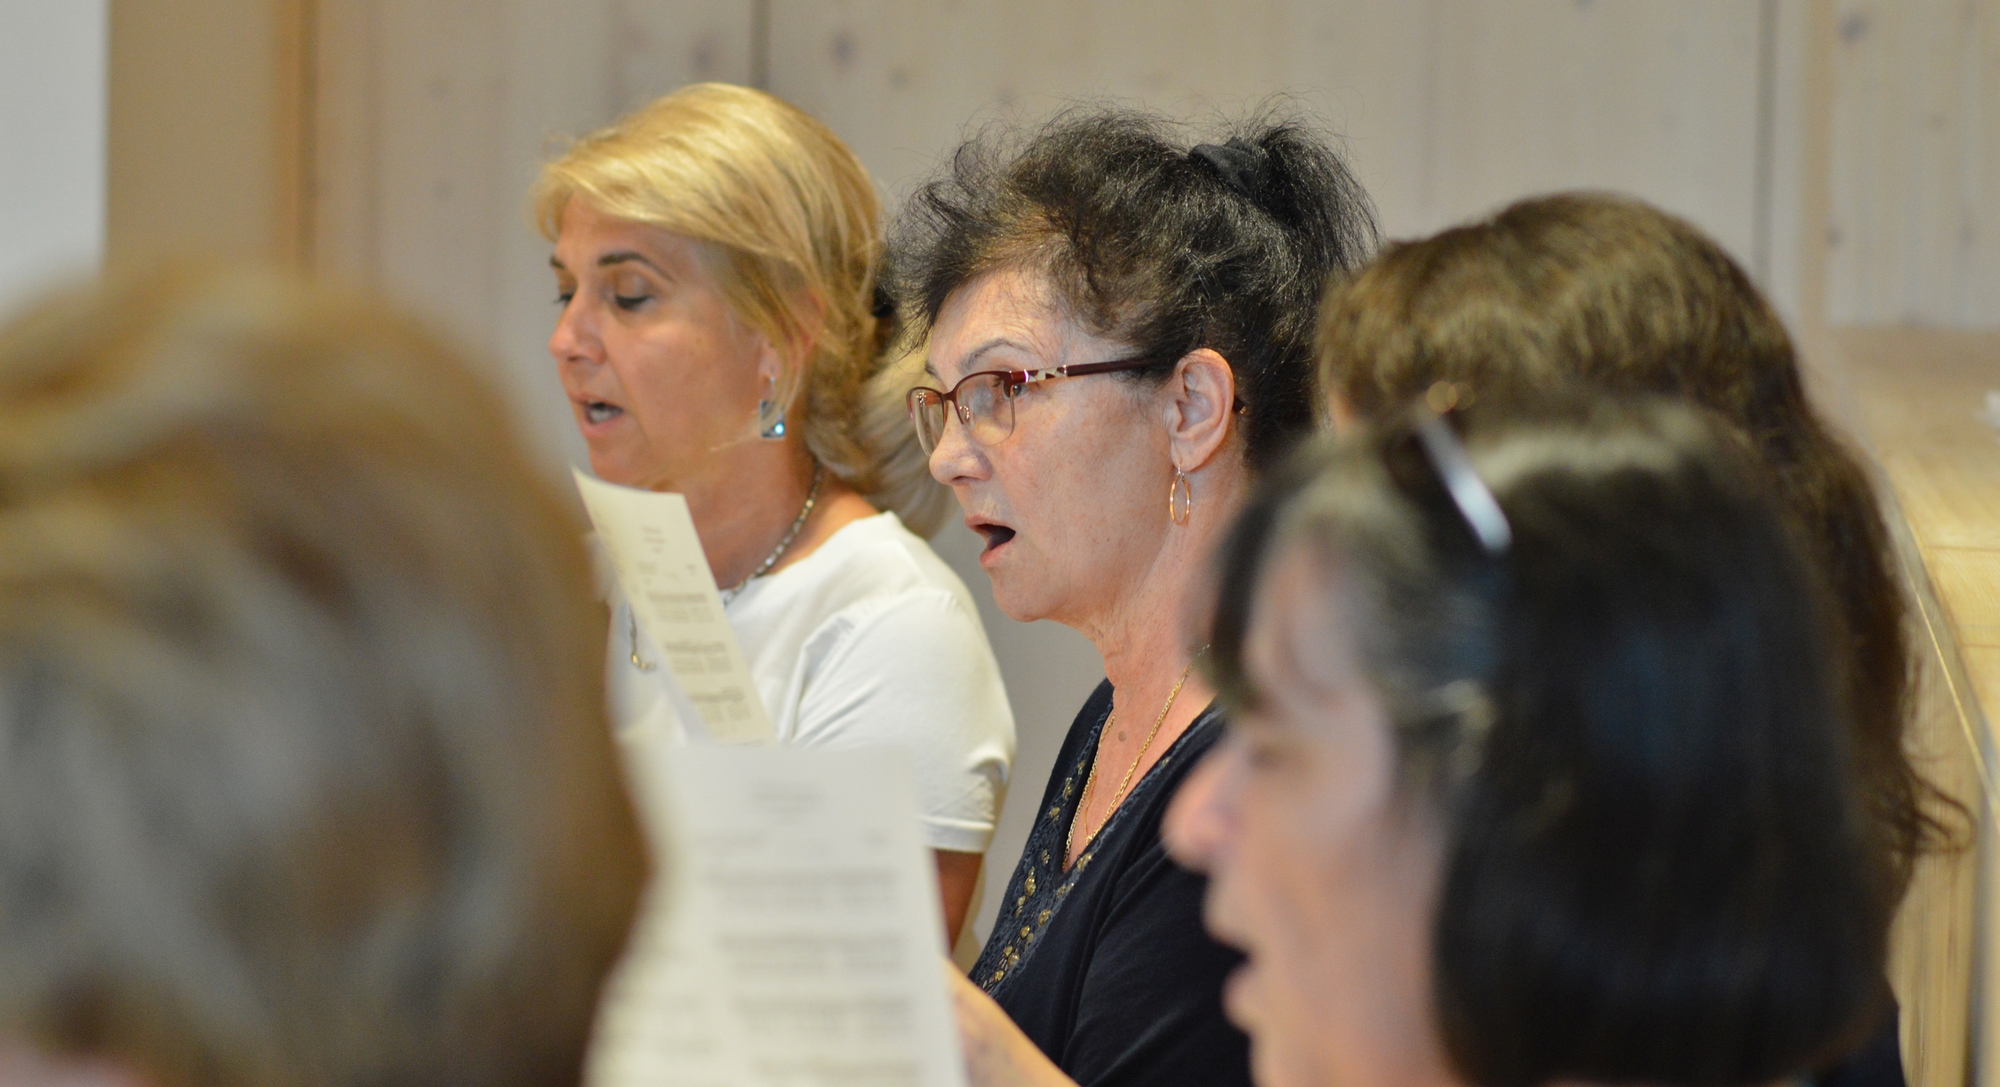 Why choir vocal training?